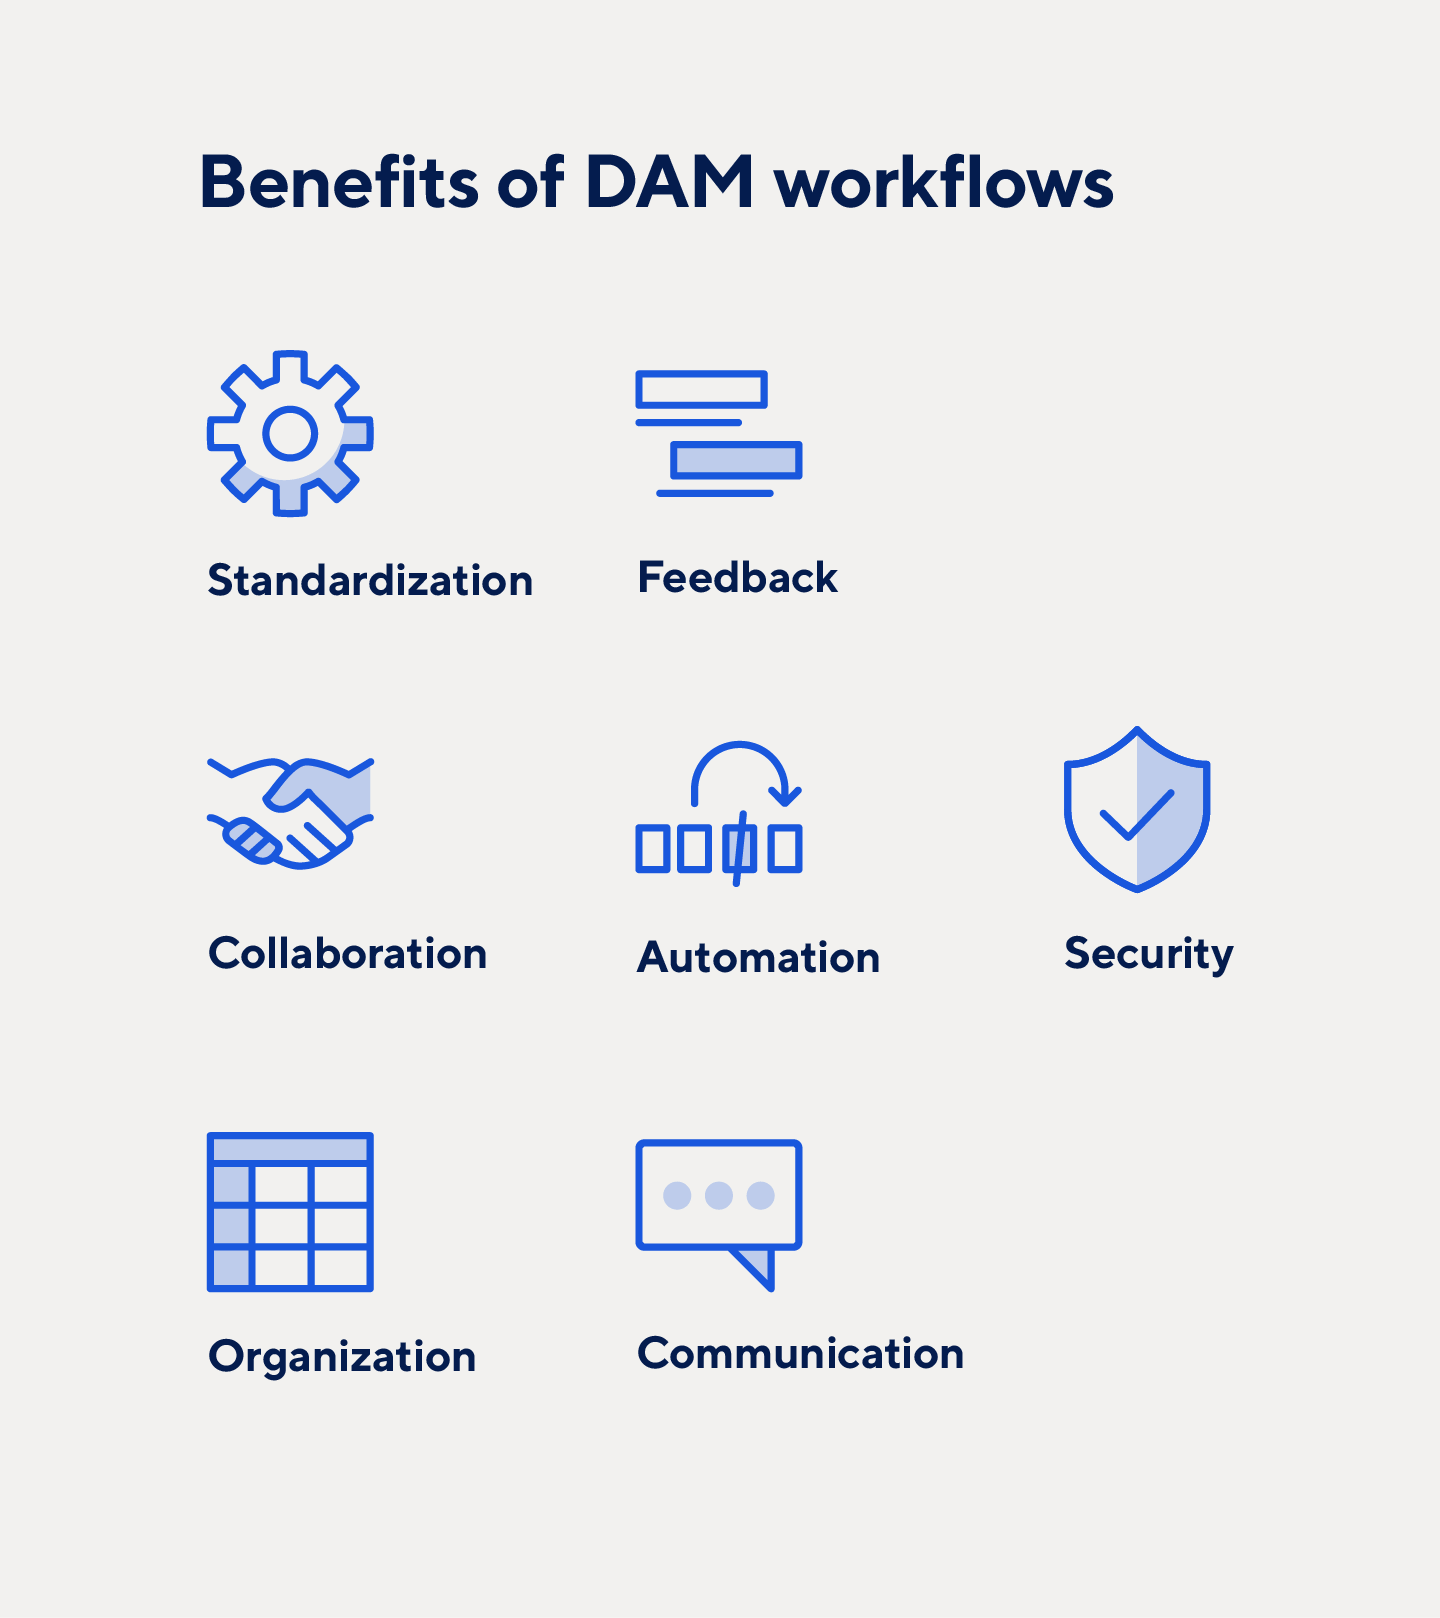 Standardization, organization, and automation are DAM workflow benefits.